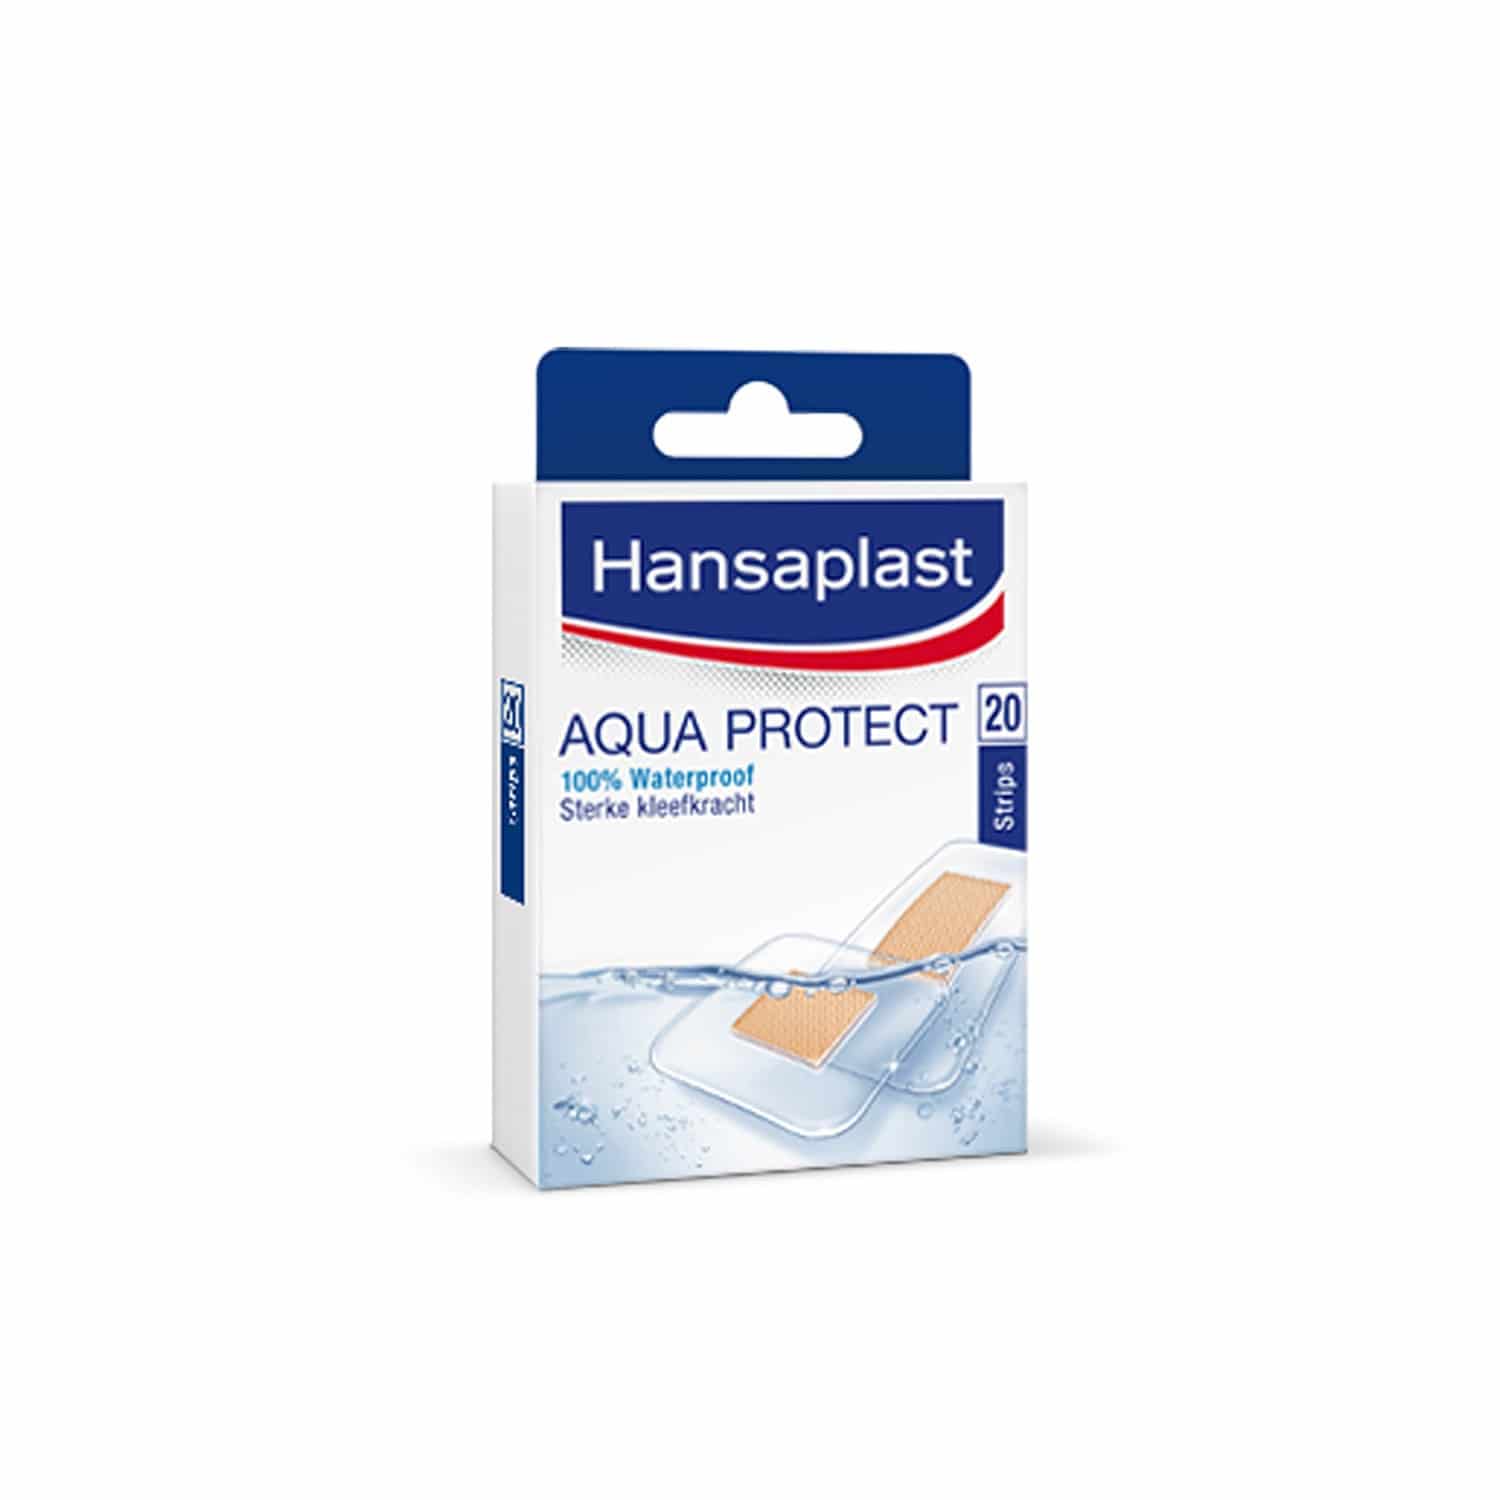 Hansaplast Aqua Protect Strip